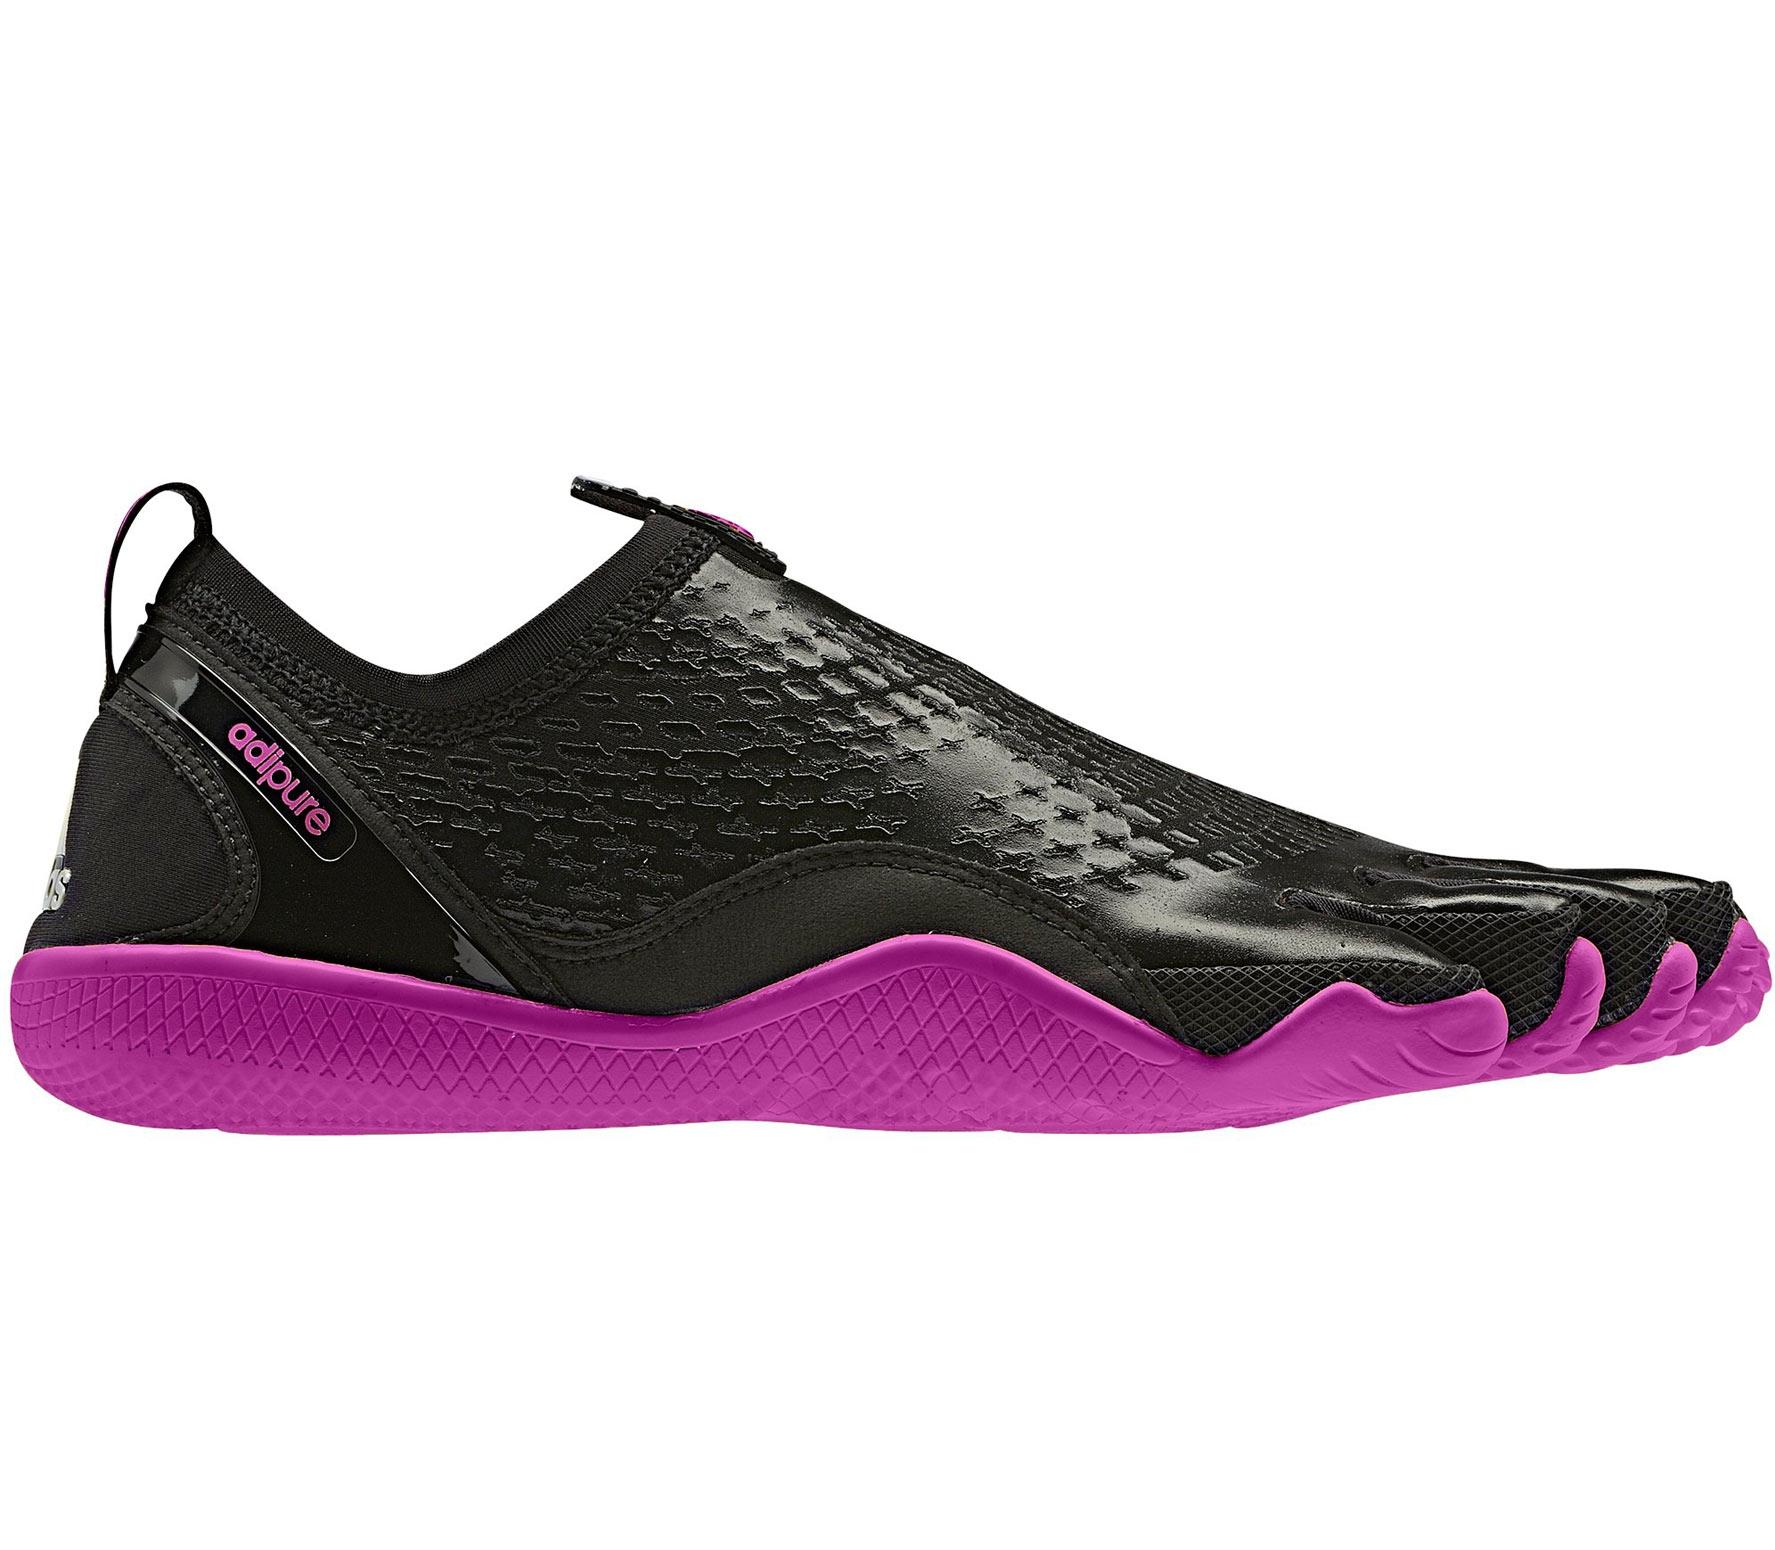 Foto Adidas - Zapatillas Fitness Mujer Adipure Trainer 1.1 - SS13 foto 925998